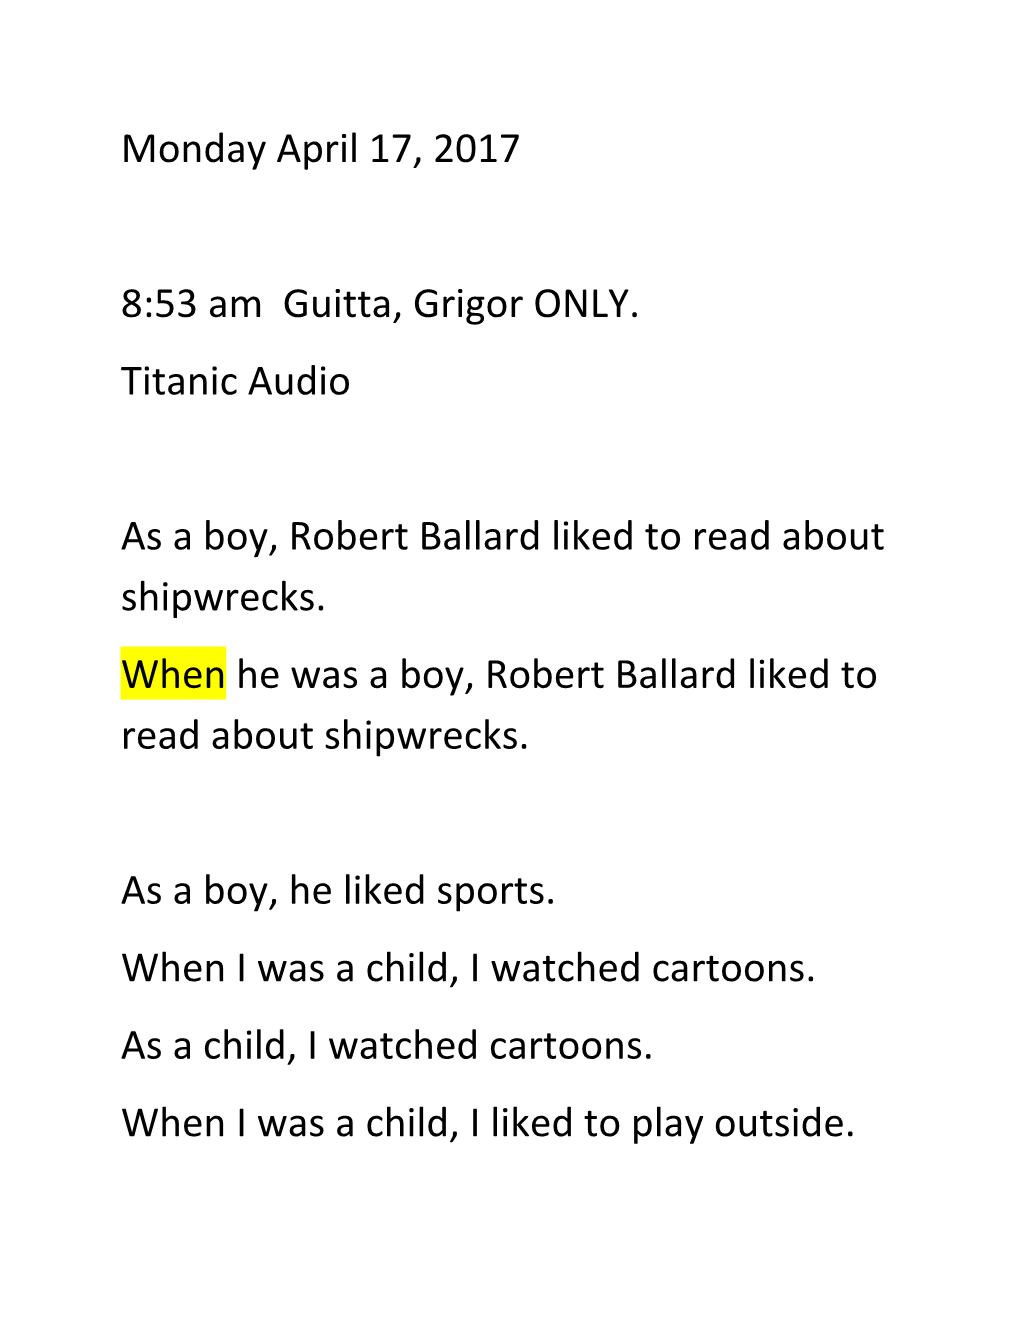 As a Boy, Robert Ballard Liked to Read About Shipwrecks